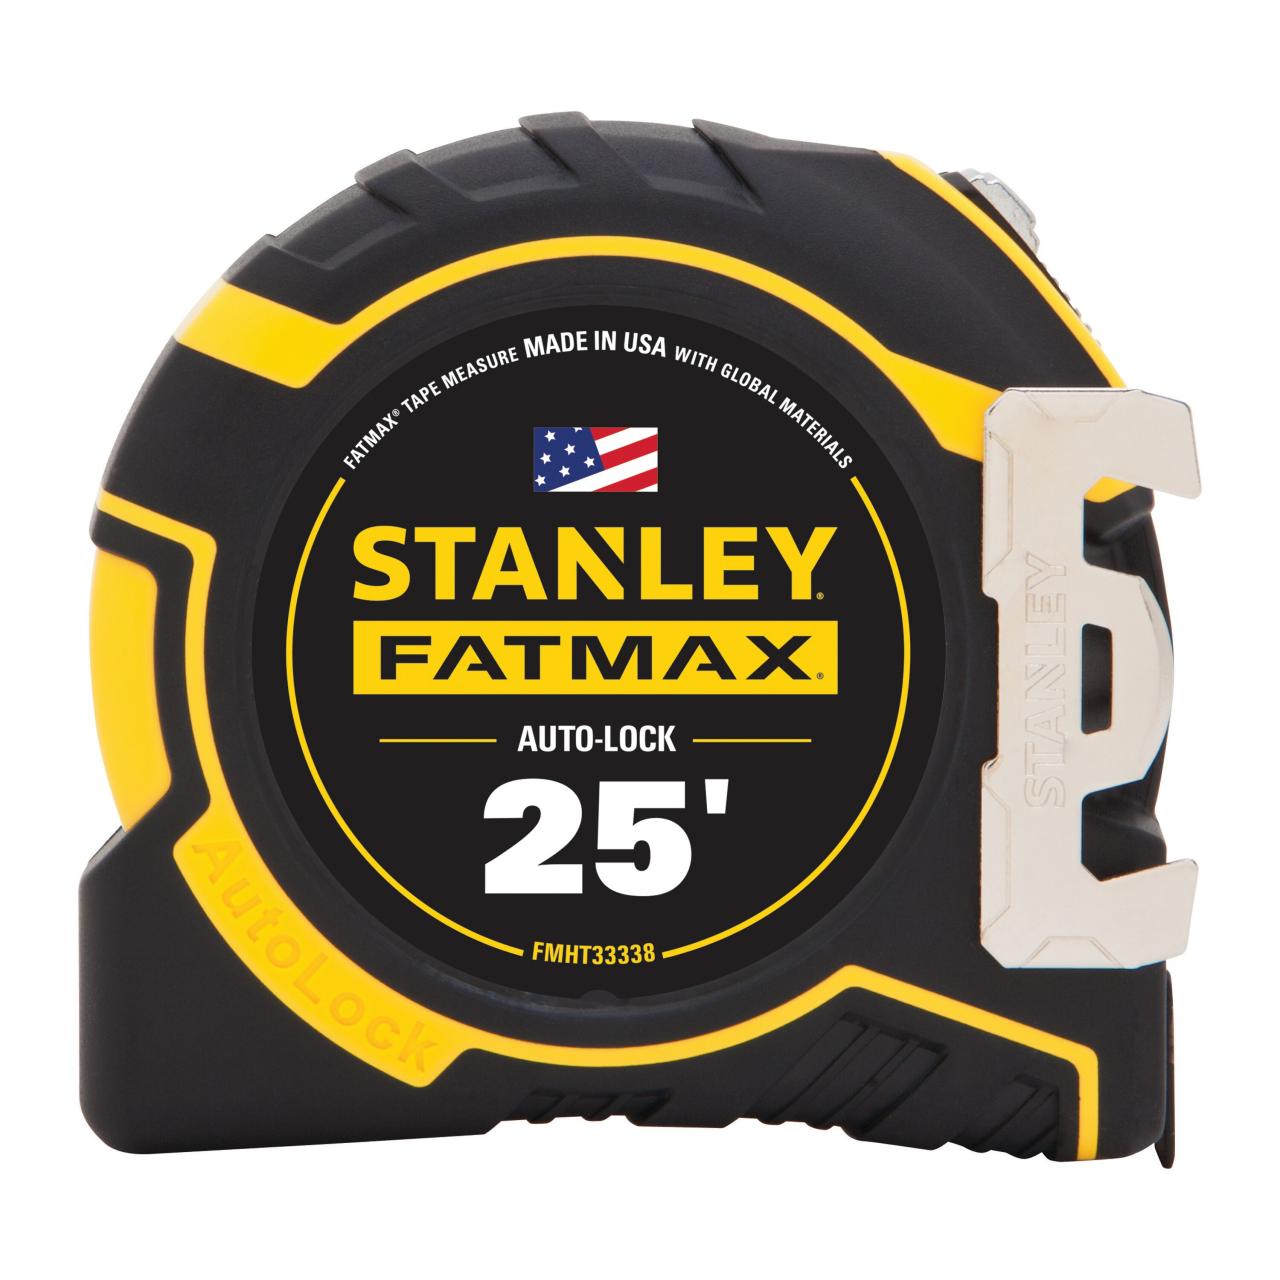 25 ft. FATMAX® Auto-Lock Tape Measure - FMHT33338 | STANLEY Tools